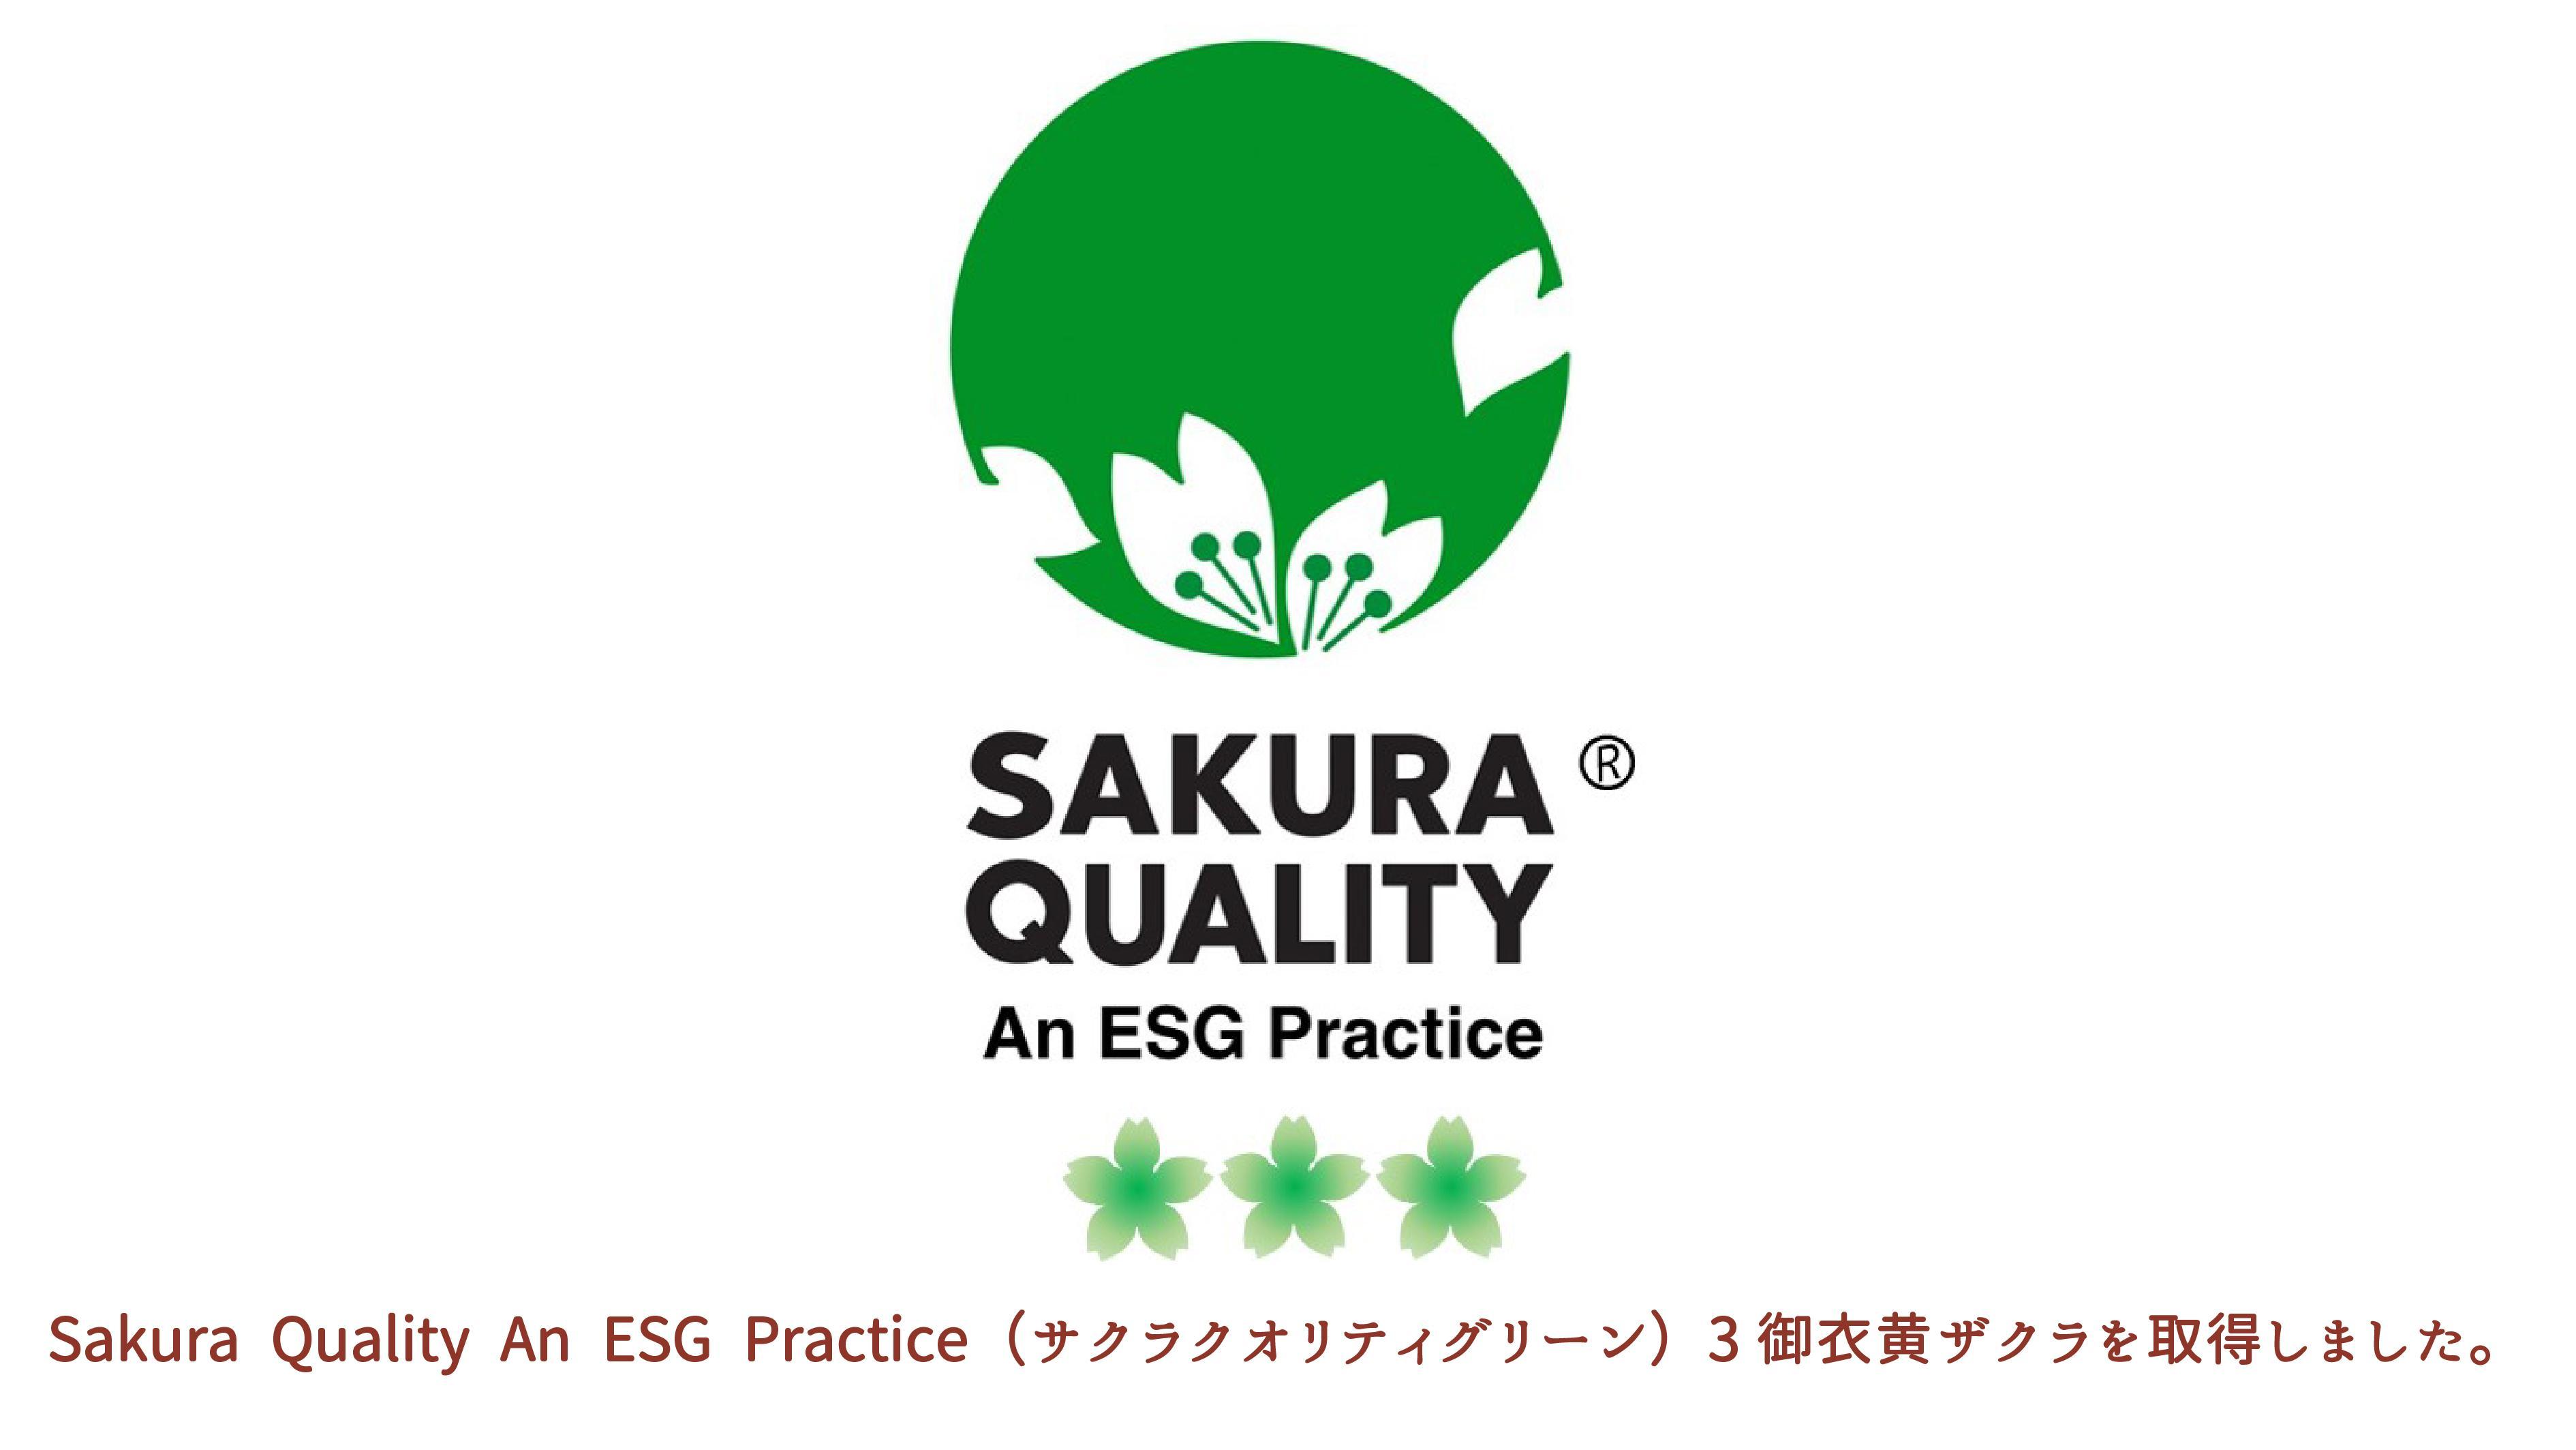 「Sakura Quality An ESG Practice（サクラクオリティグリーン）」を取得しました。